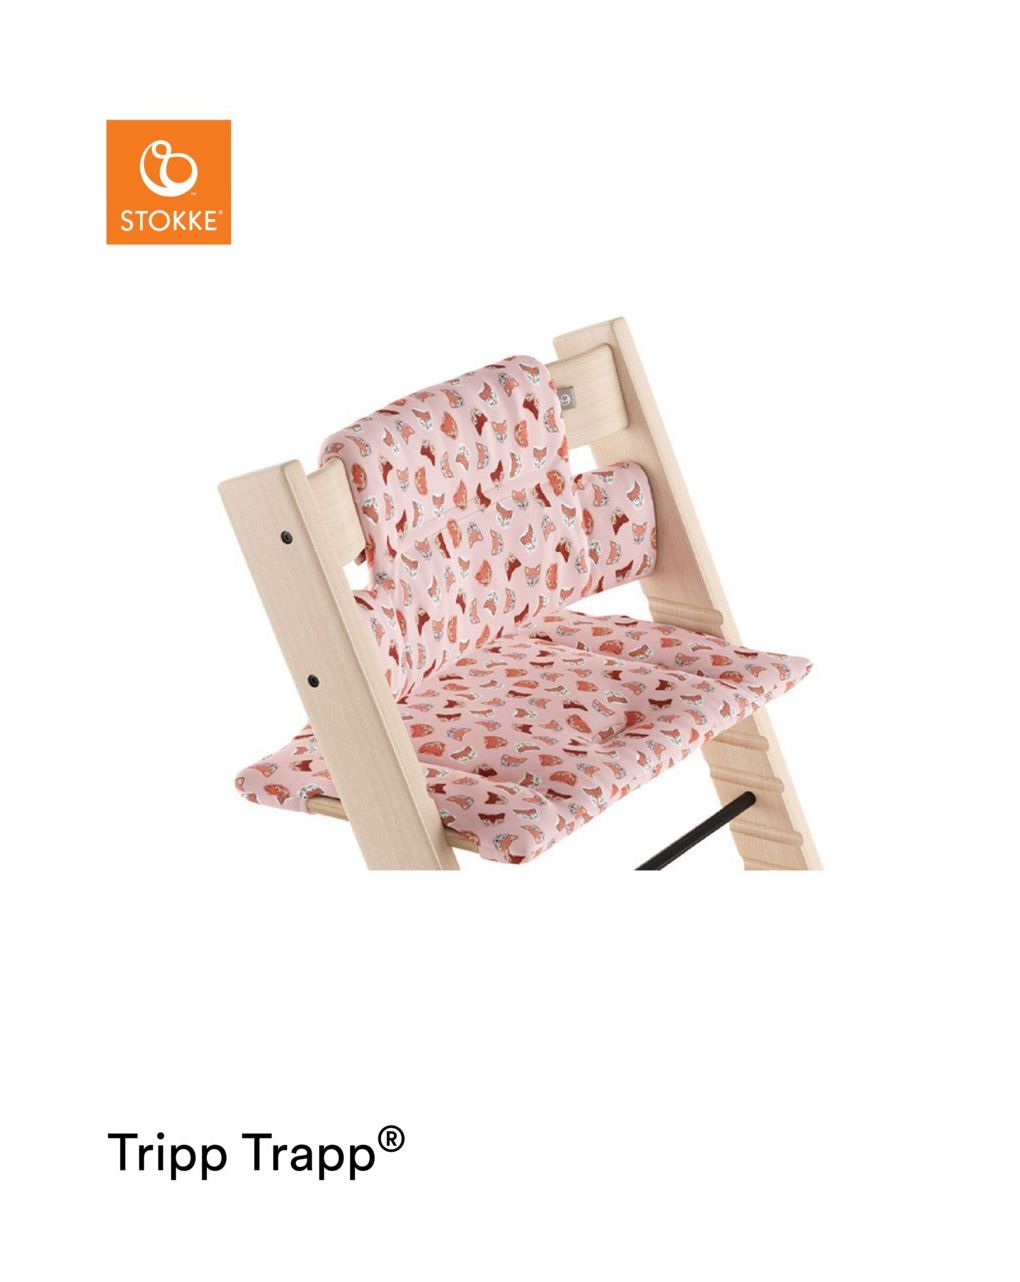 Tripp trapp® cuscino - raposa rosa - Stokke